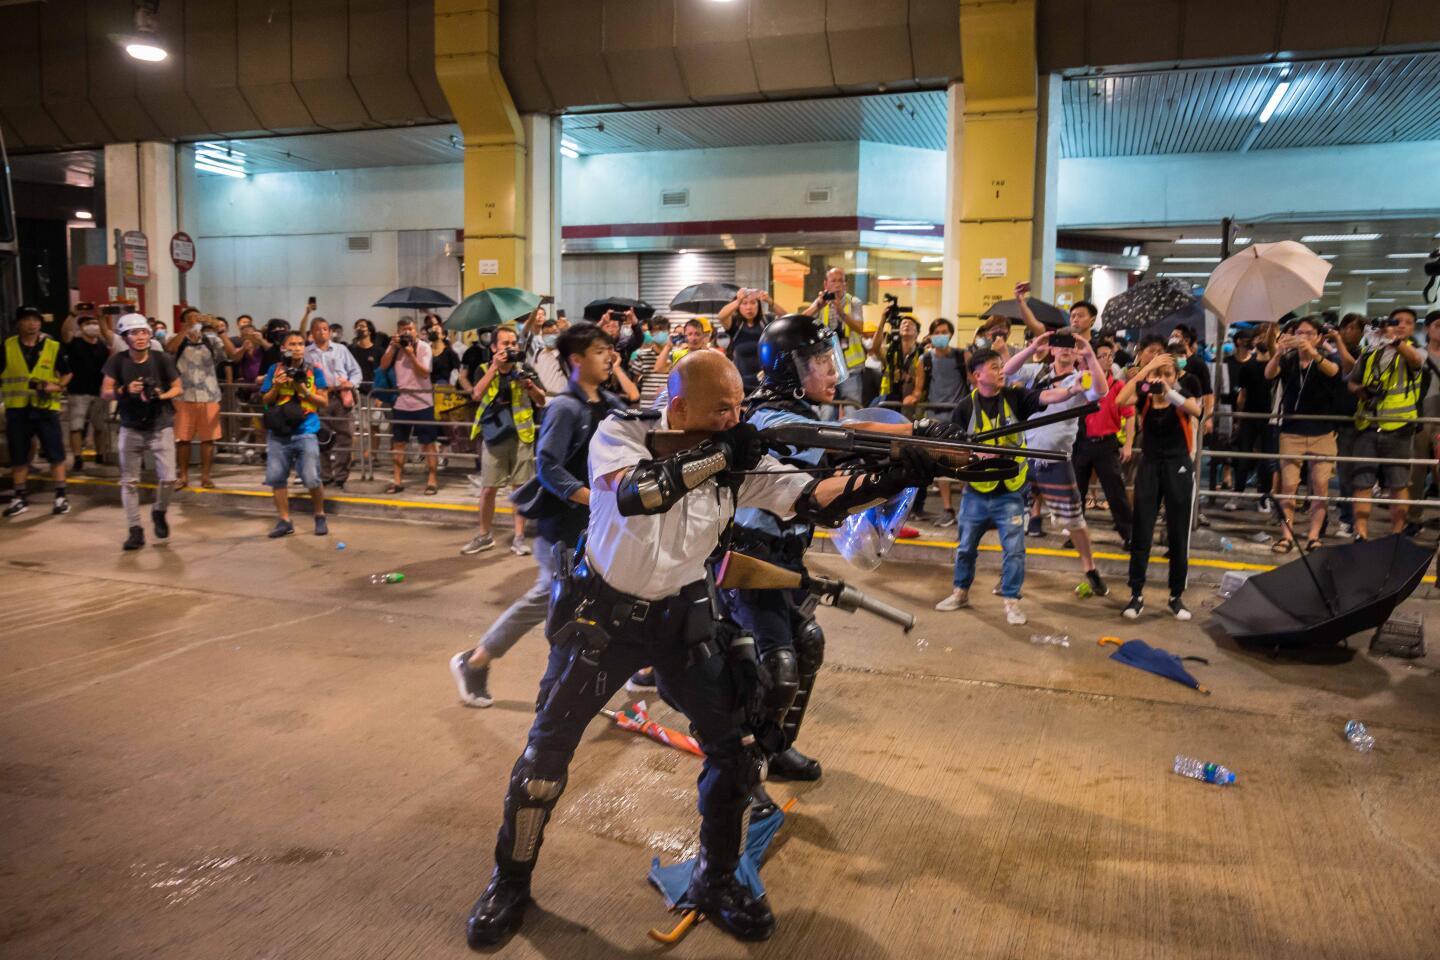 Unrest in Hong Kong